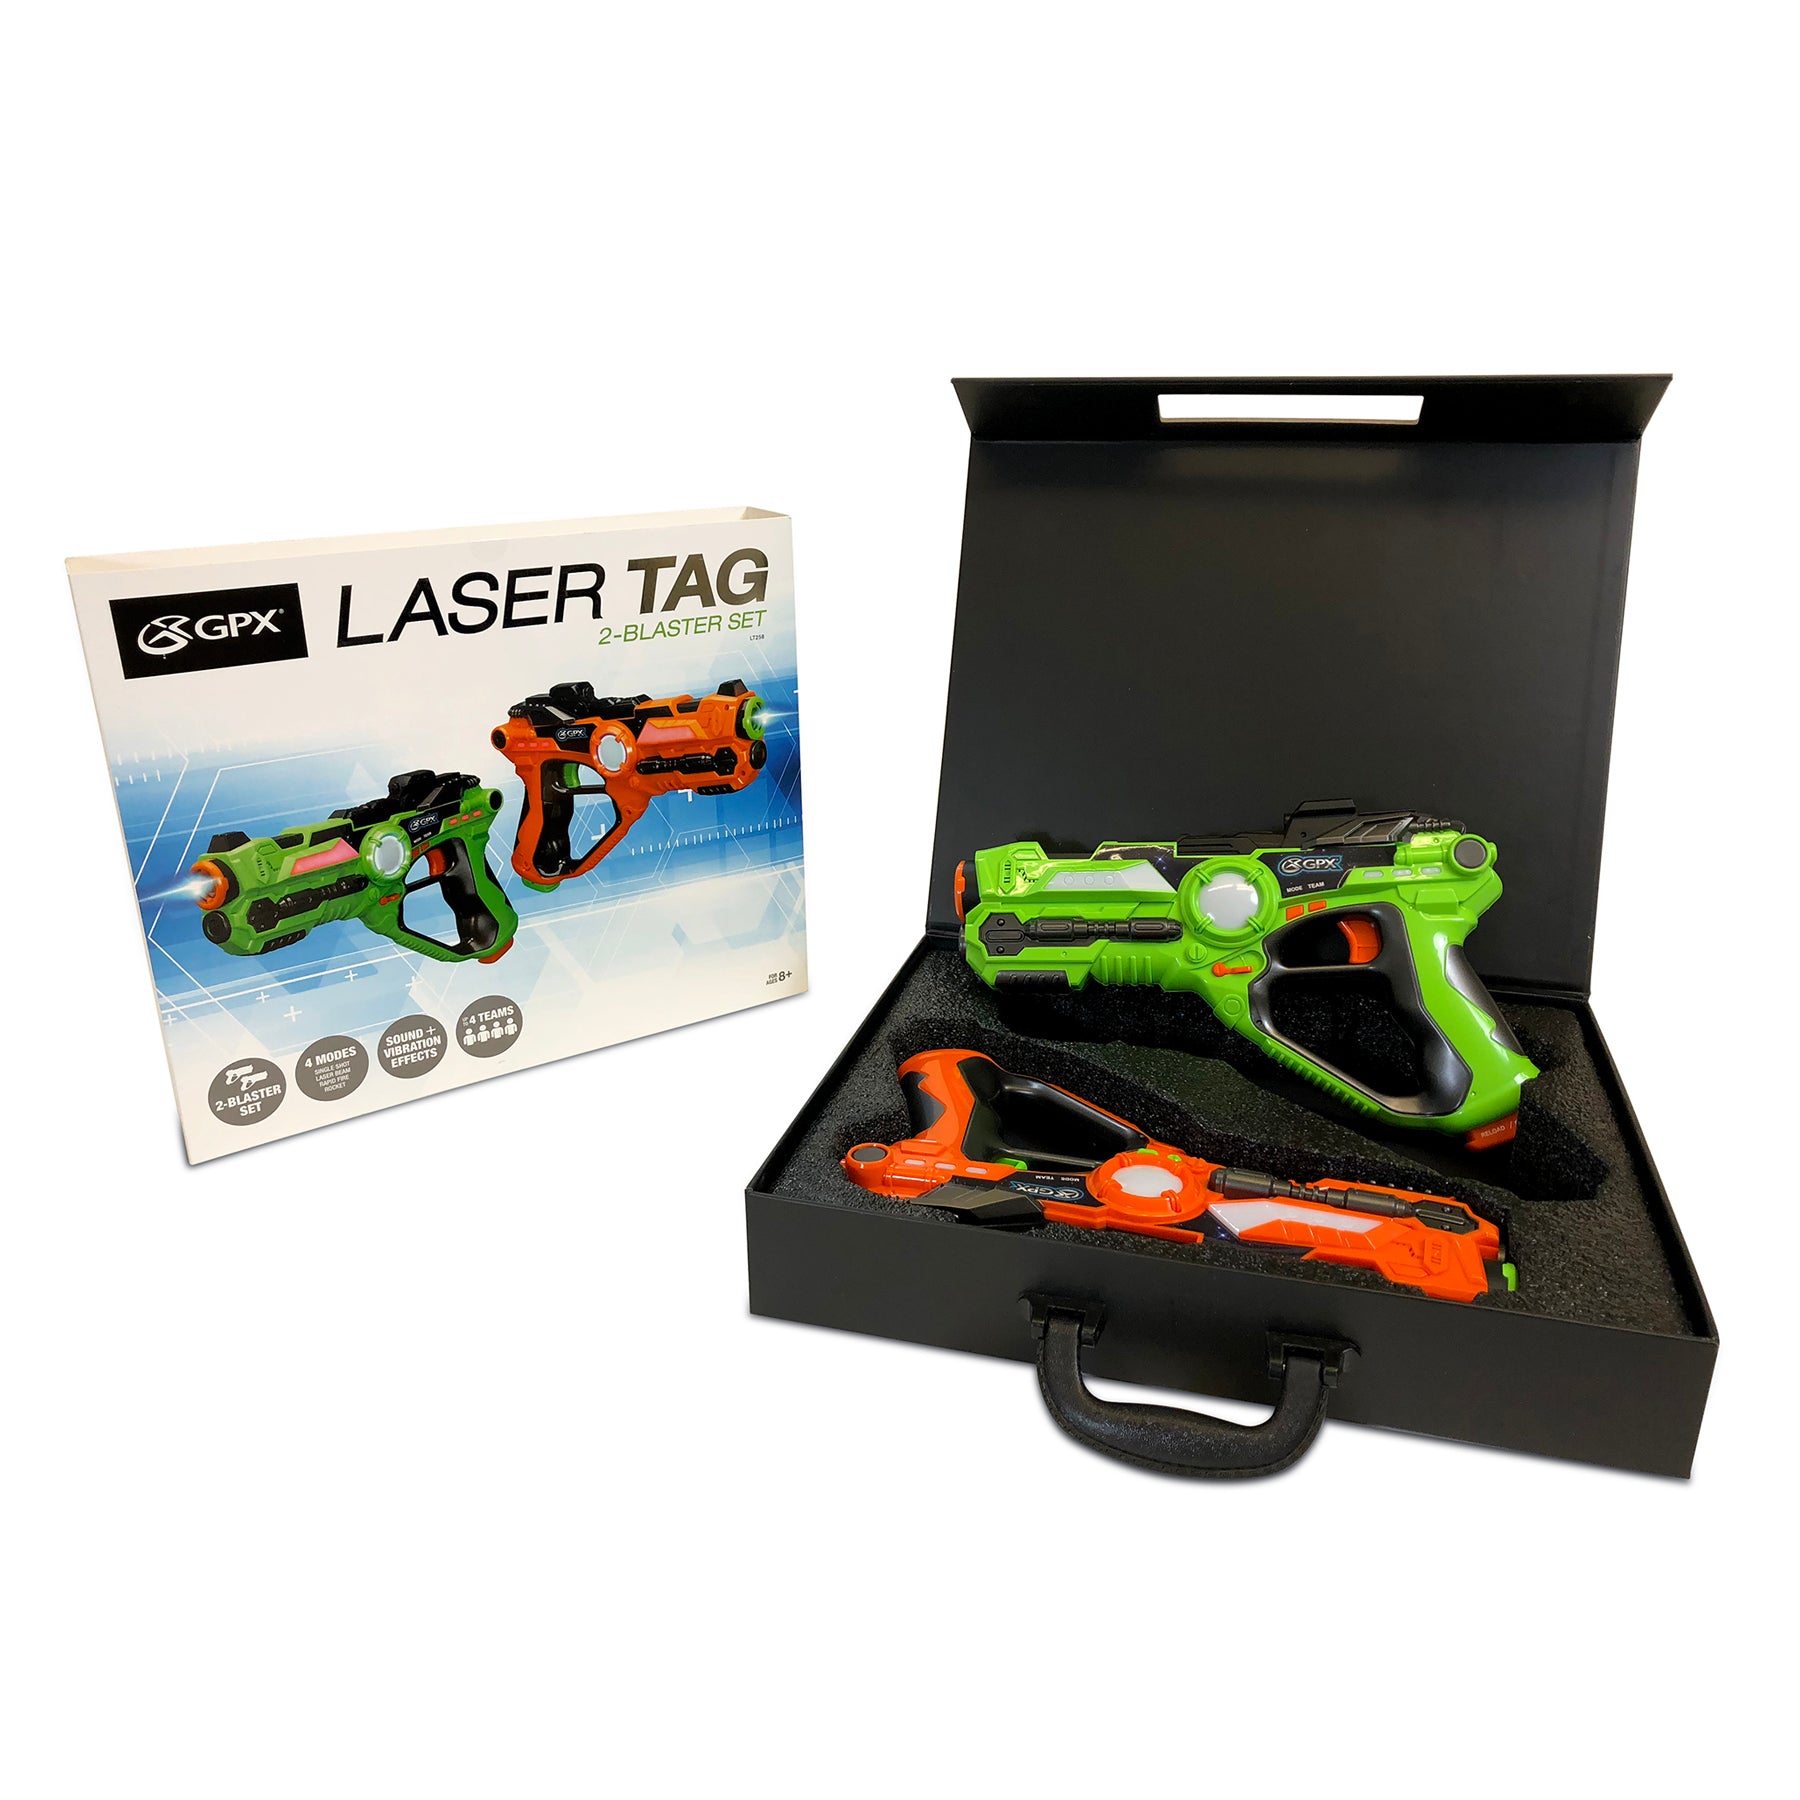 GPX Laser Tag Blaster, Set of 2